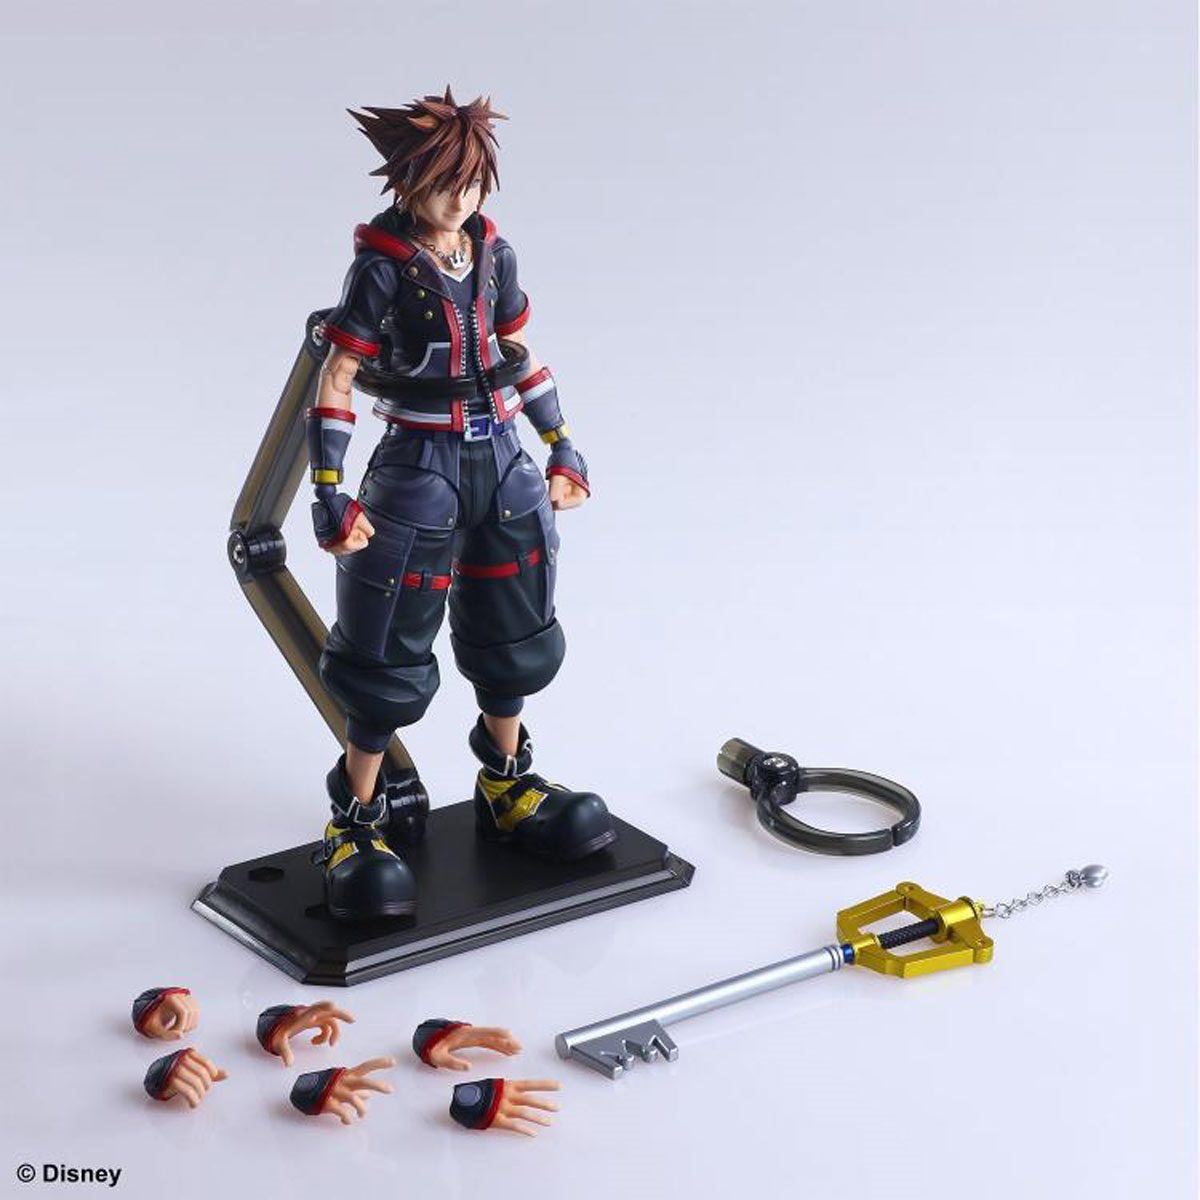 Sora Deluxe Ver 2 Kingdom Hearts III Play Arts Kai Action Figure